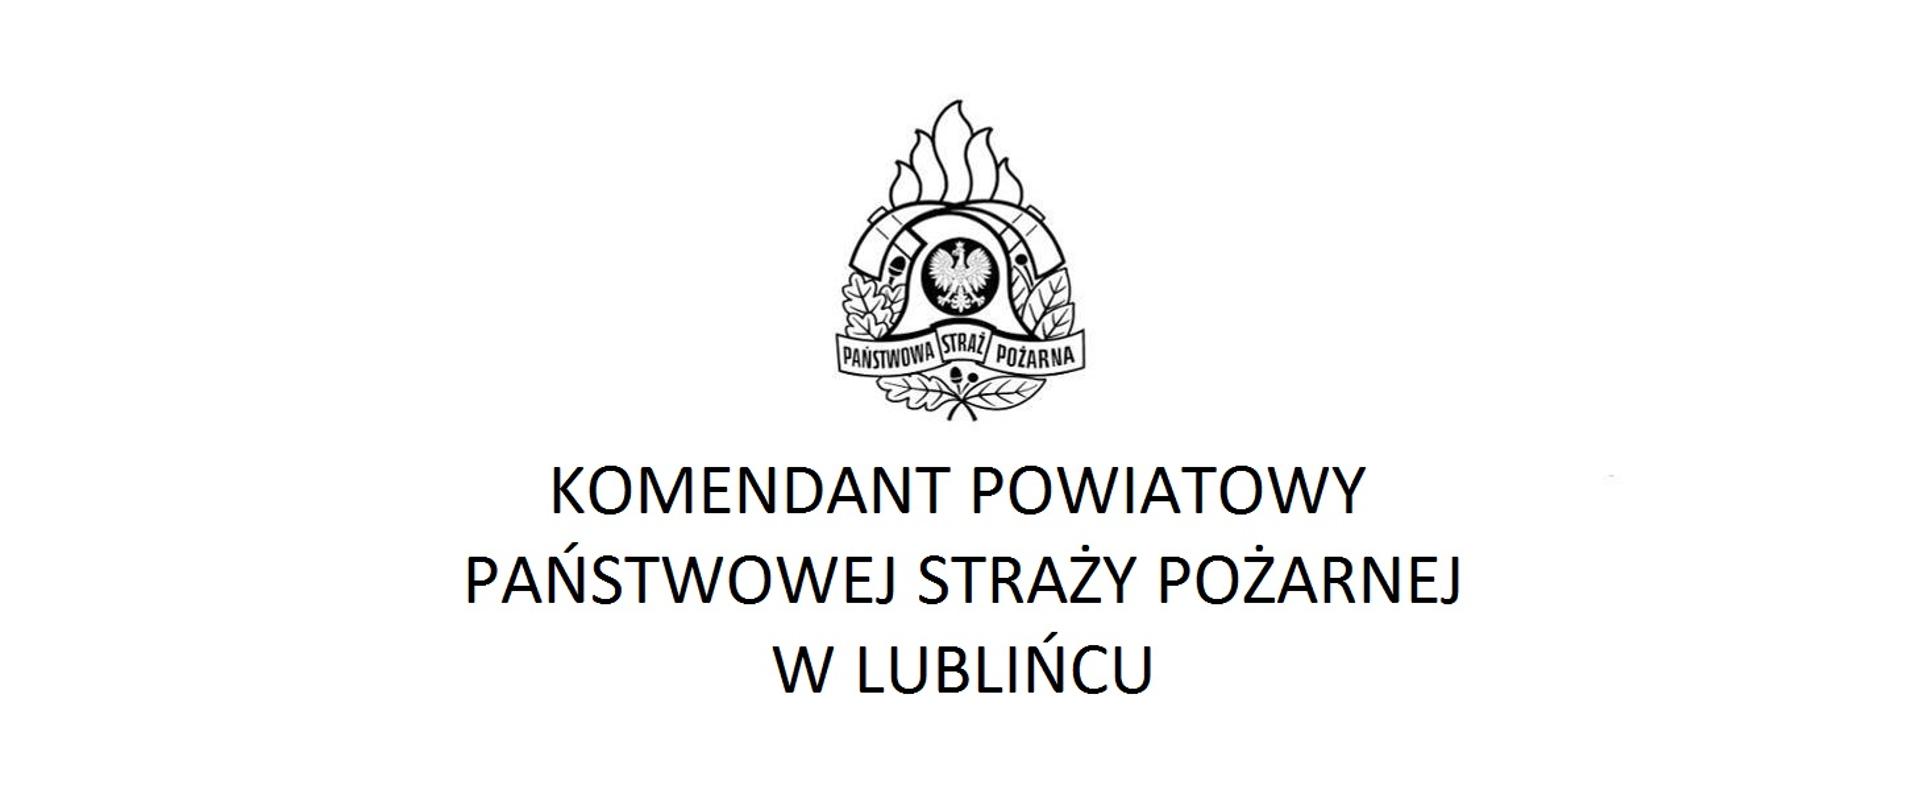 baner KP PSP w Lublińcu